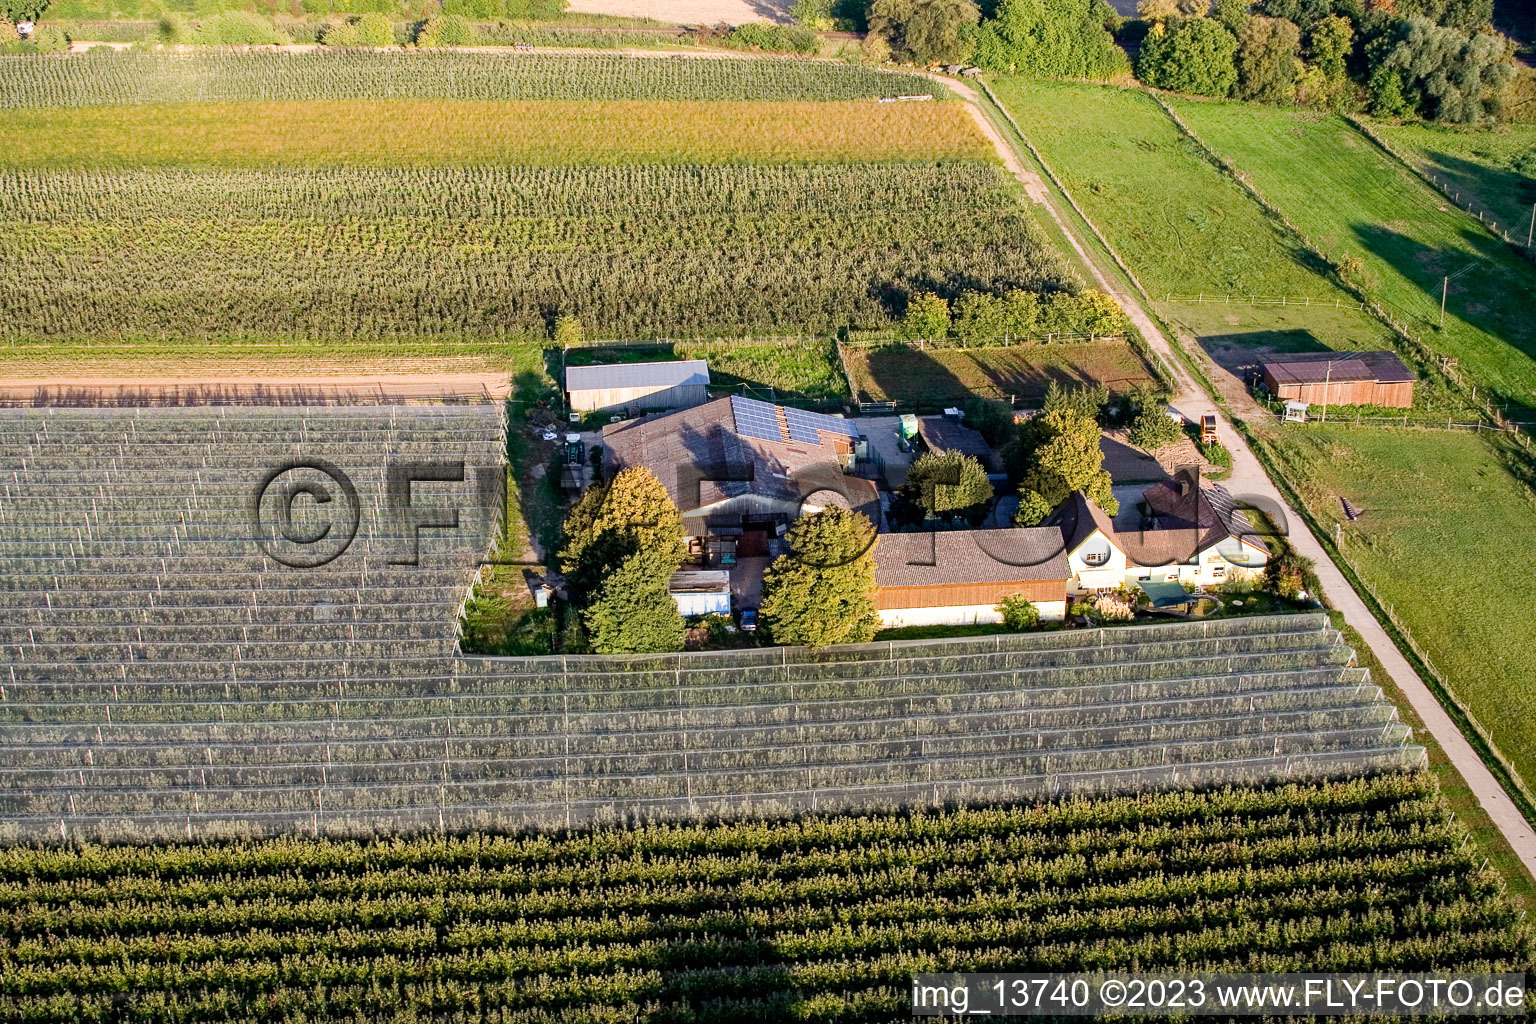 Lindenhof: Gensheimer fruit and asparagus farm in Steinweiler in the state Rhineland-Palatinate, Germany